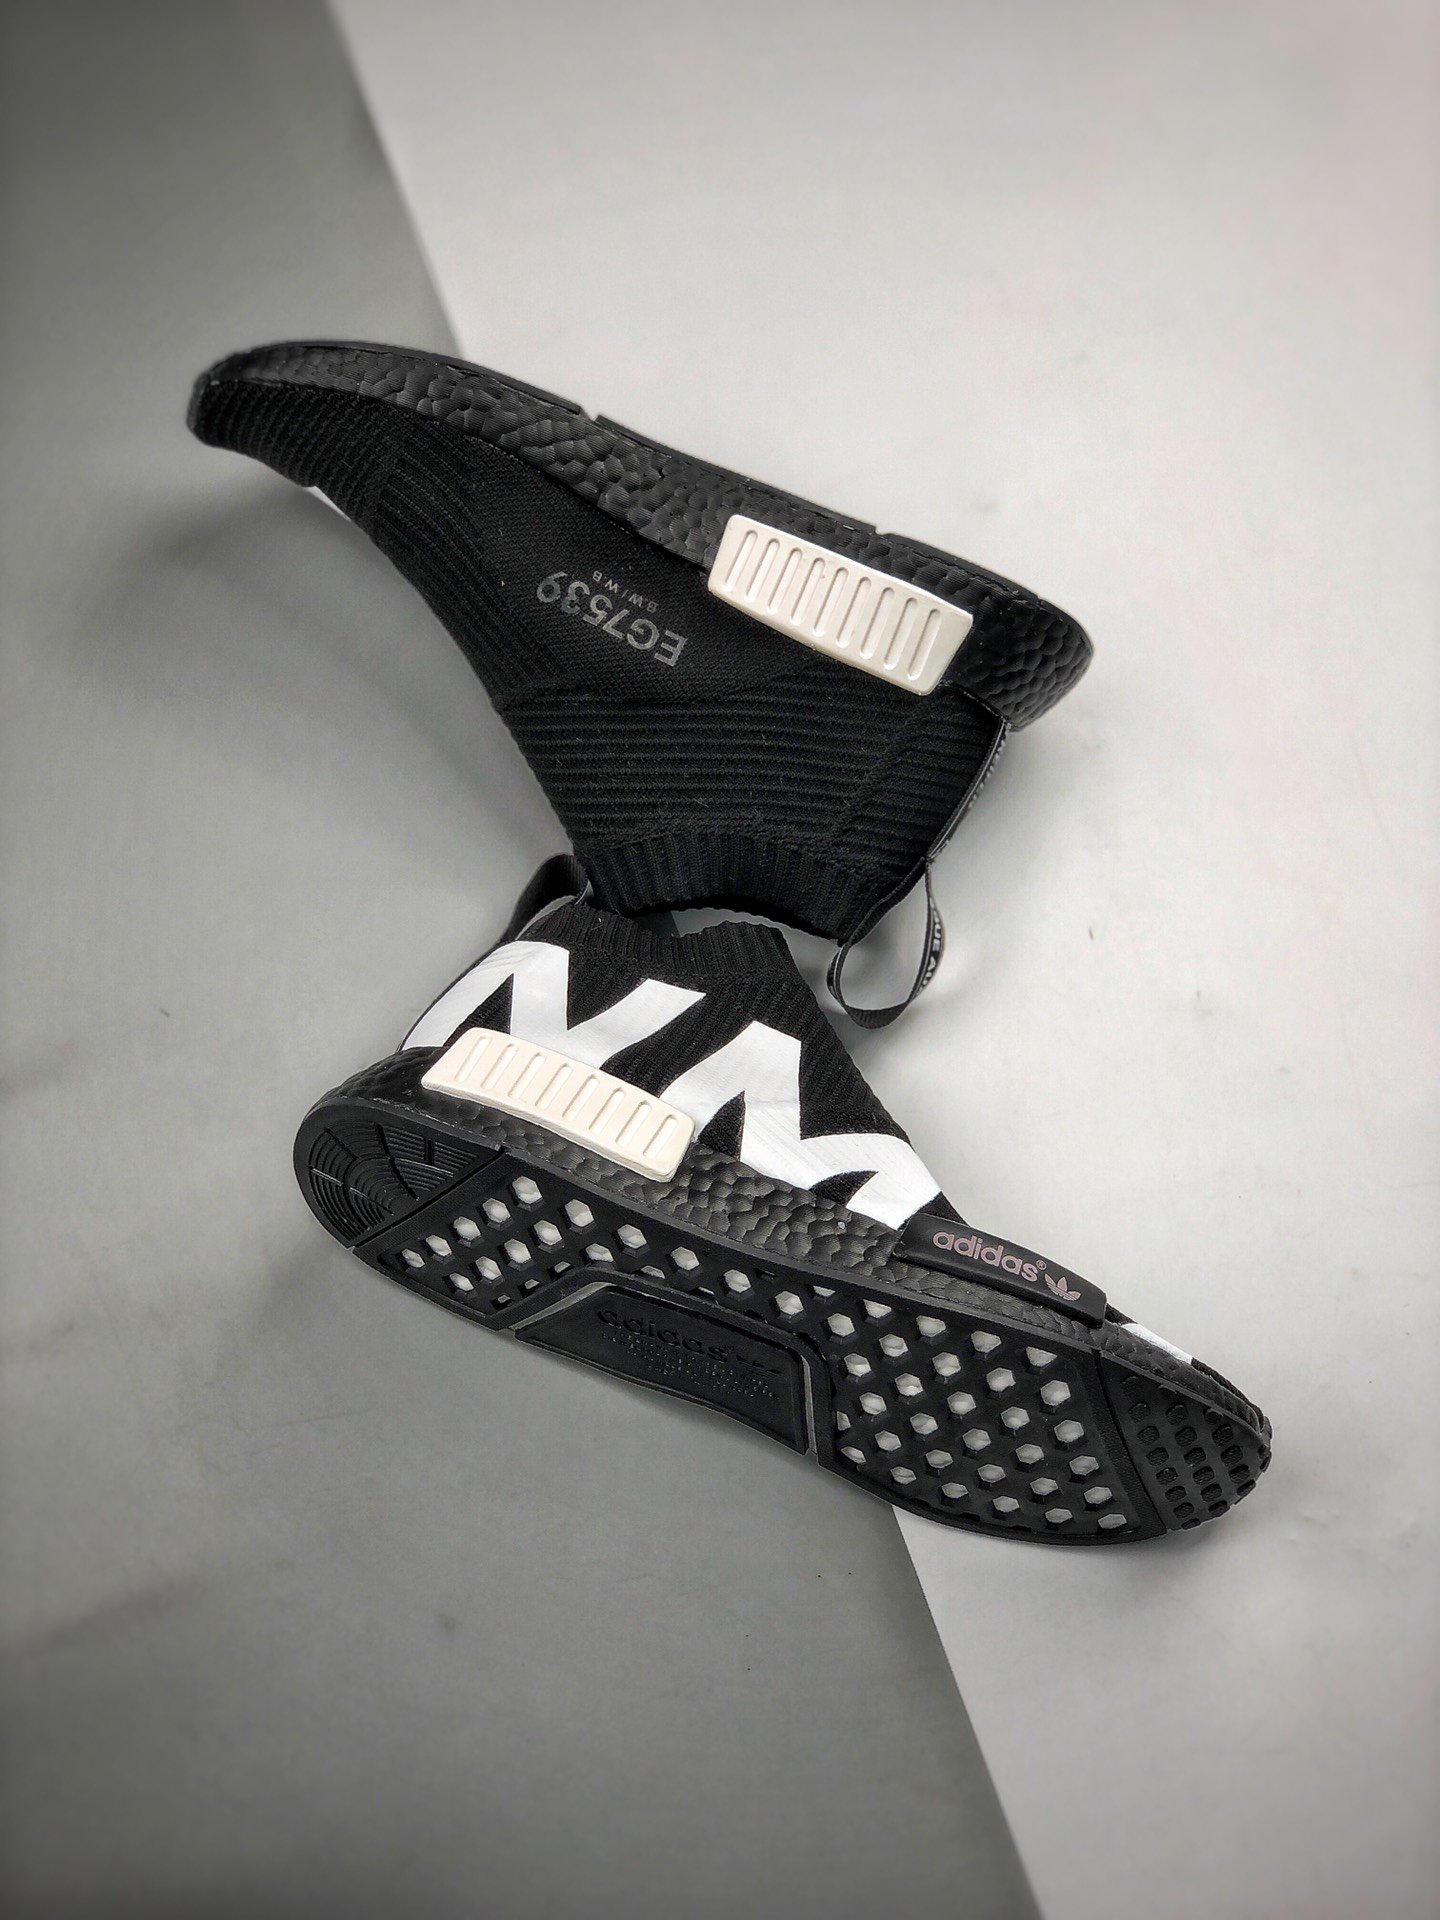 Krage Sow Vandre adidas NMD CS1 Primeknit Black White For Sale – Sneaker Hello